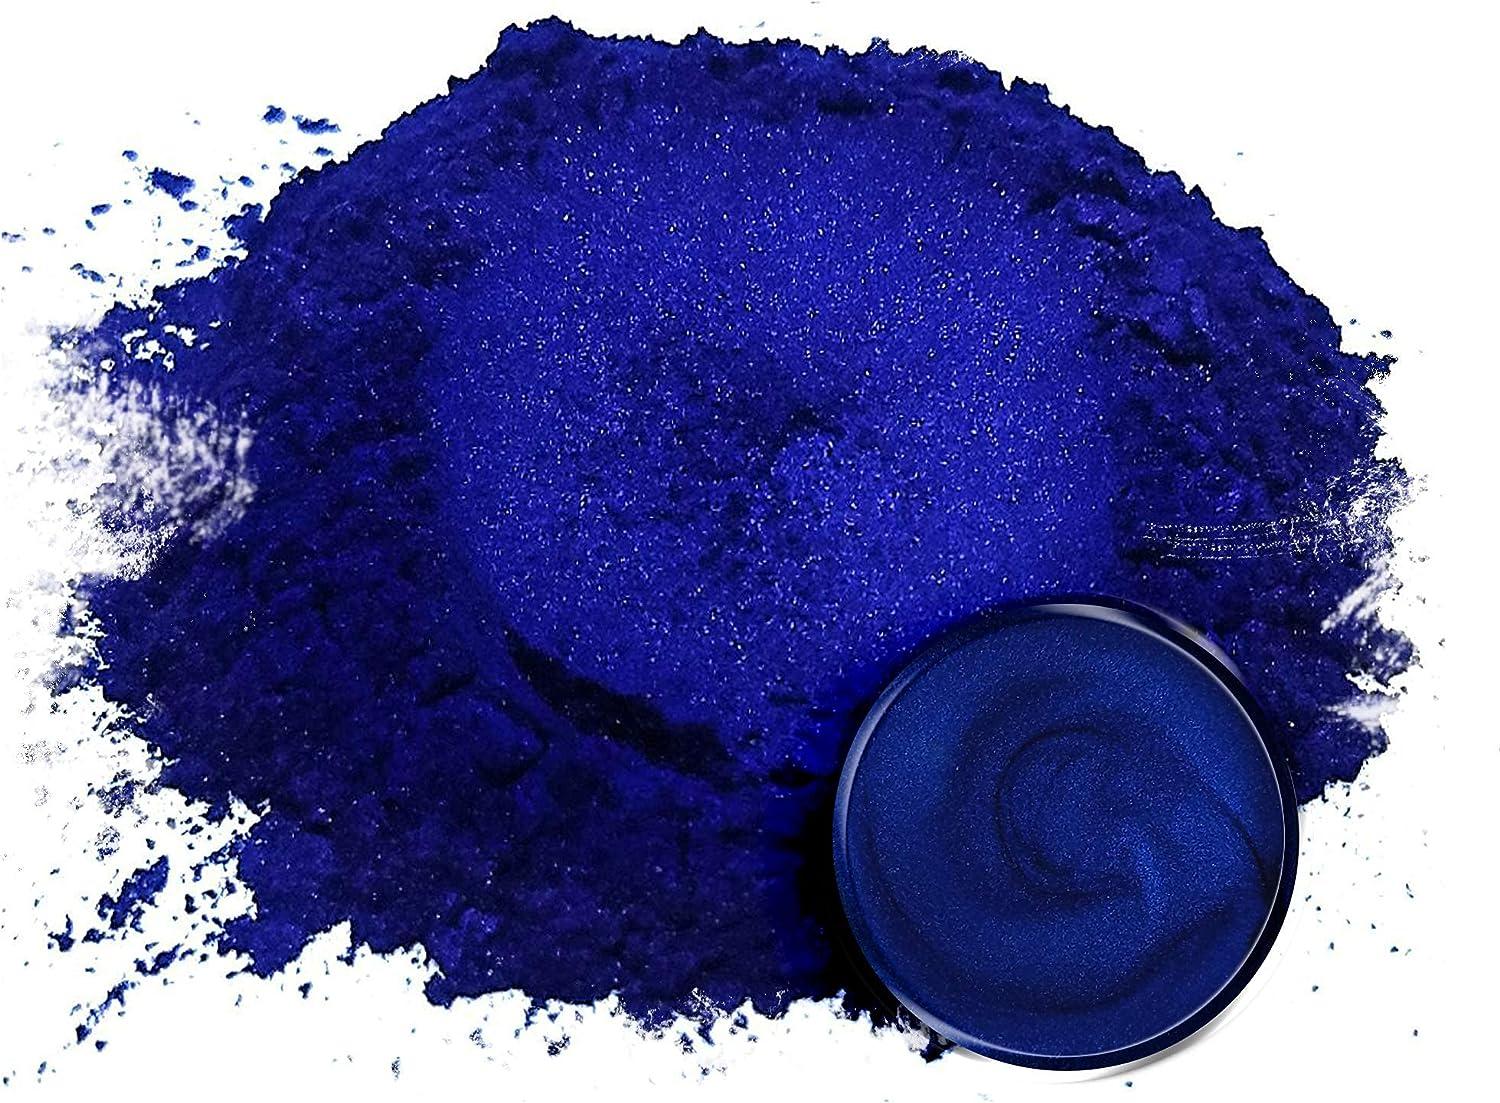  Eye Candy Premium Mica Powder Pigment “Okinawa Blue” (50g)  Multipurpose DIY Arts and Crafts Additive